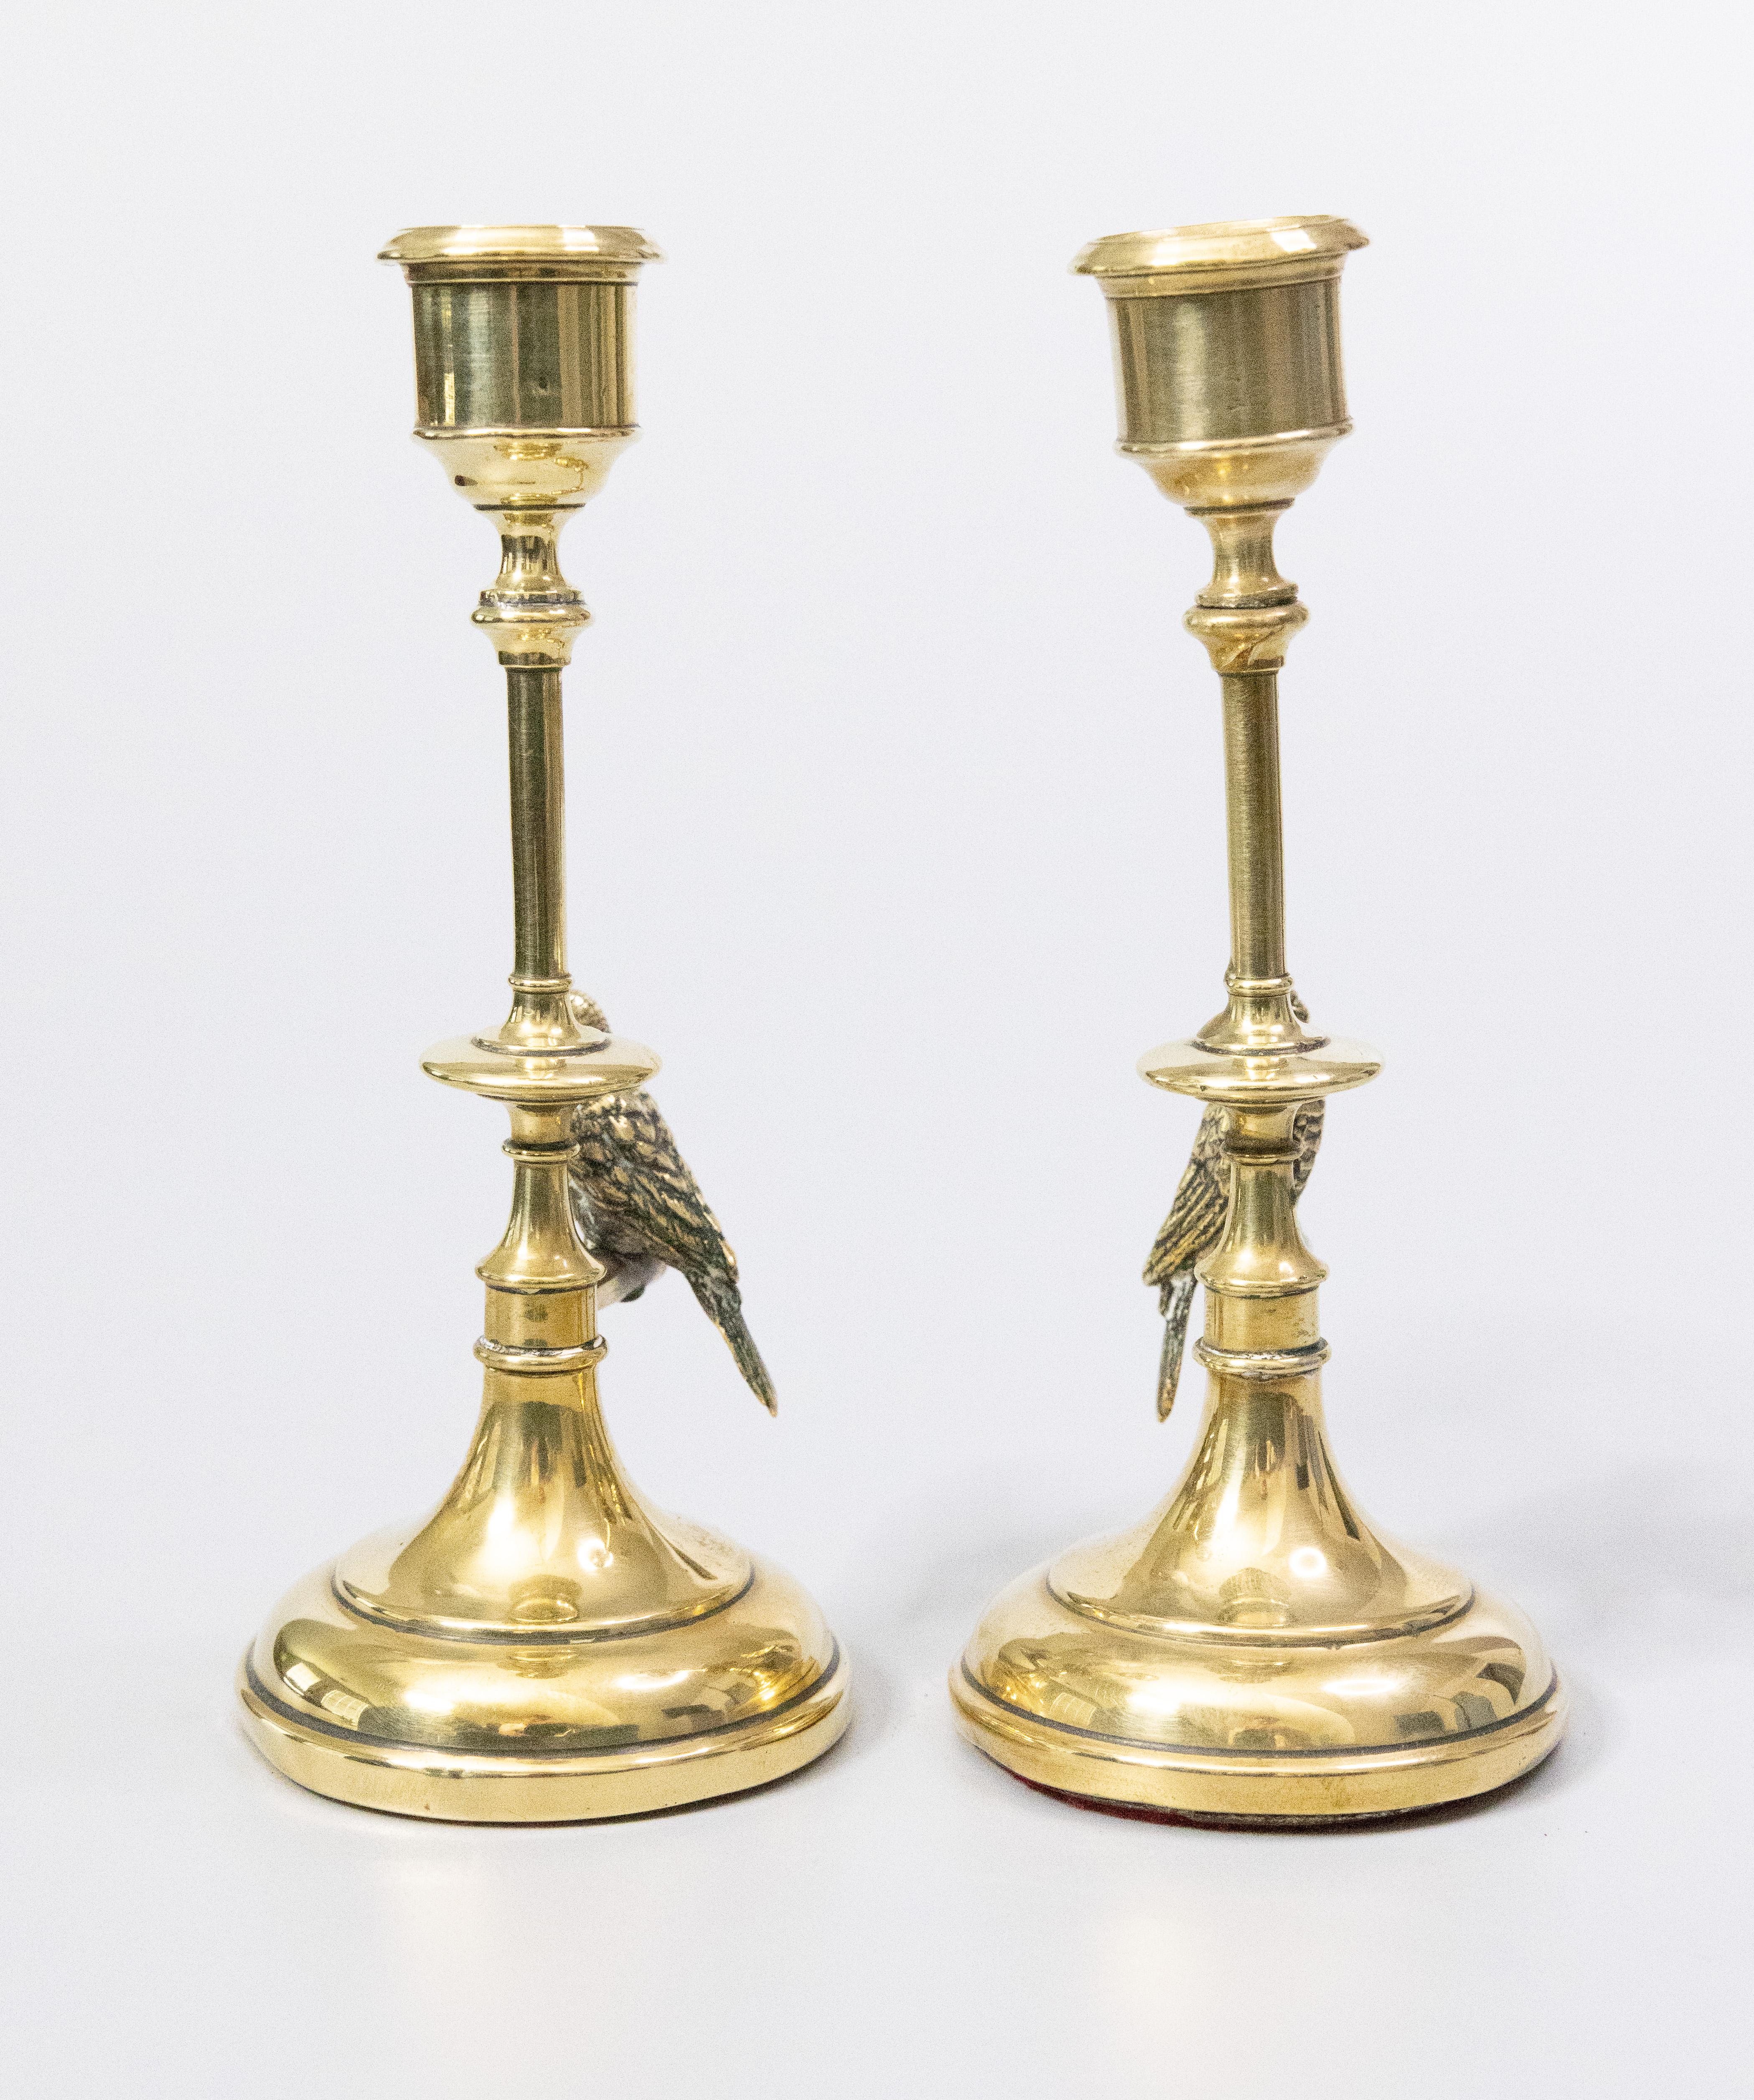 Edwardian Antique English Brass Candlesticks with Budgies Parakeets, circa 1910